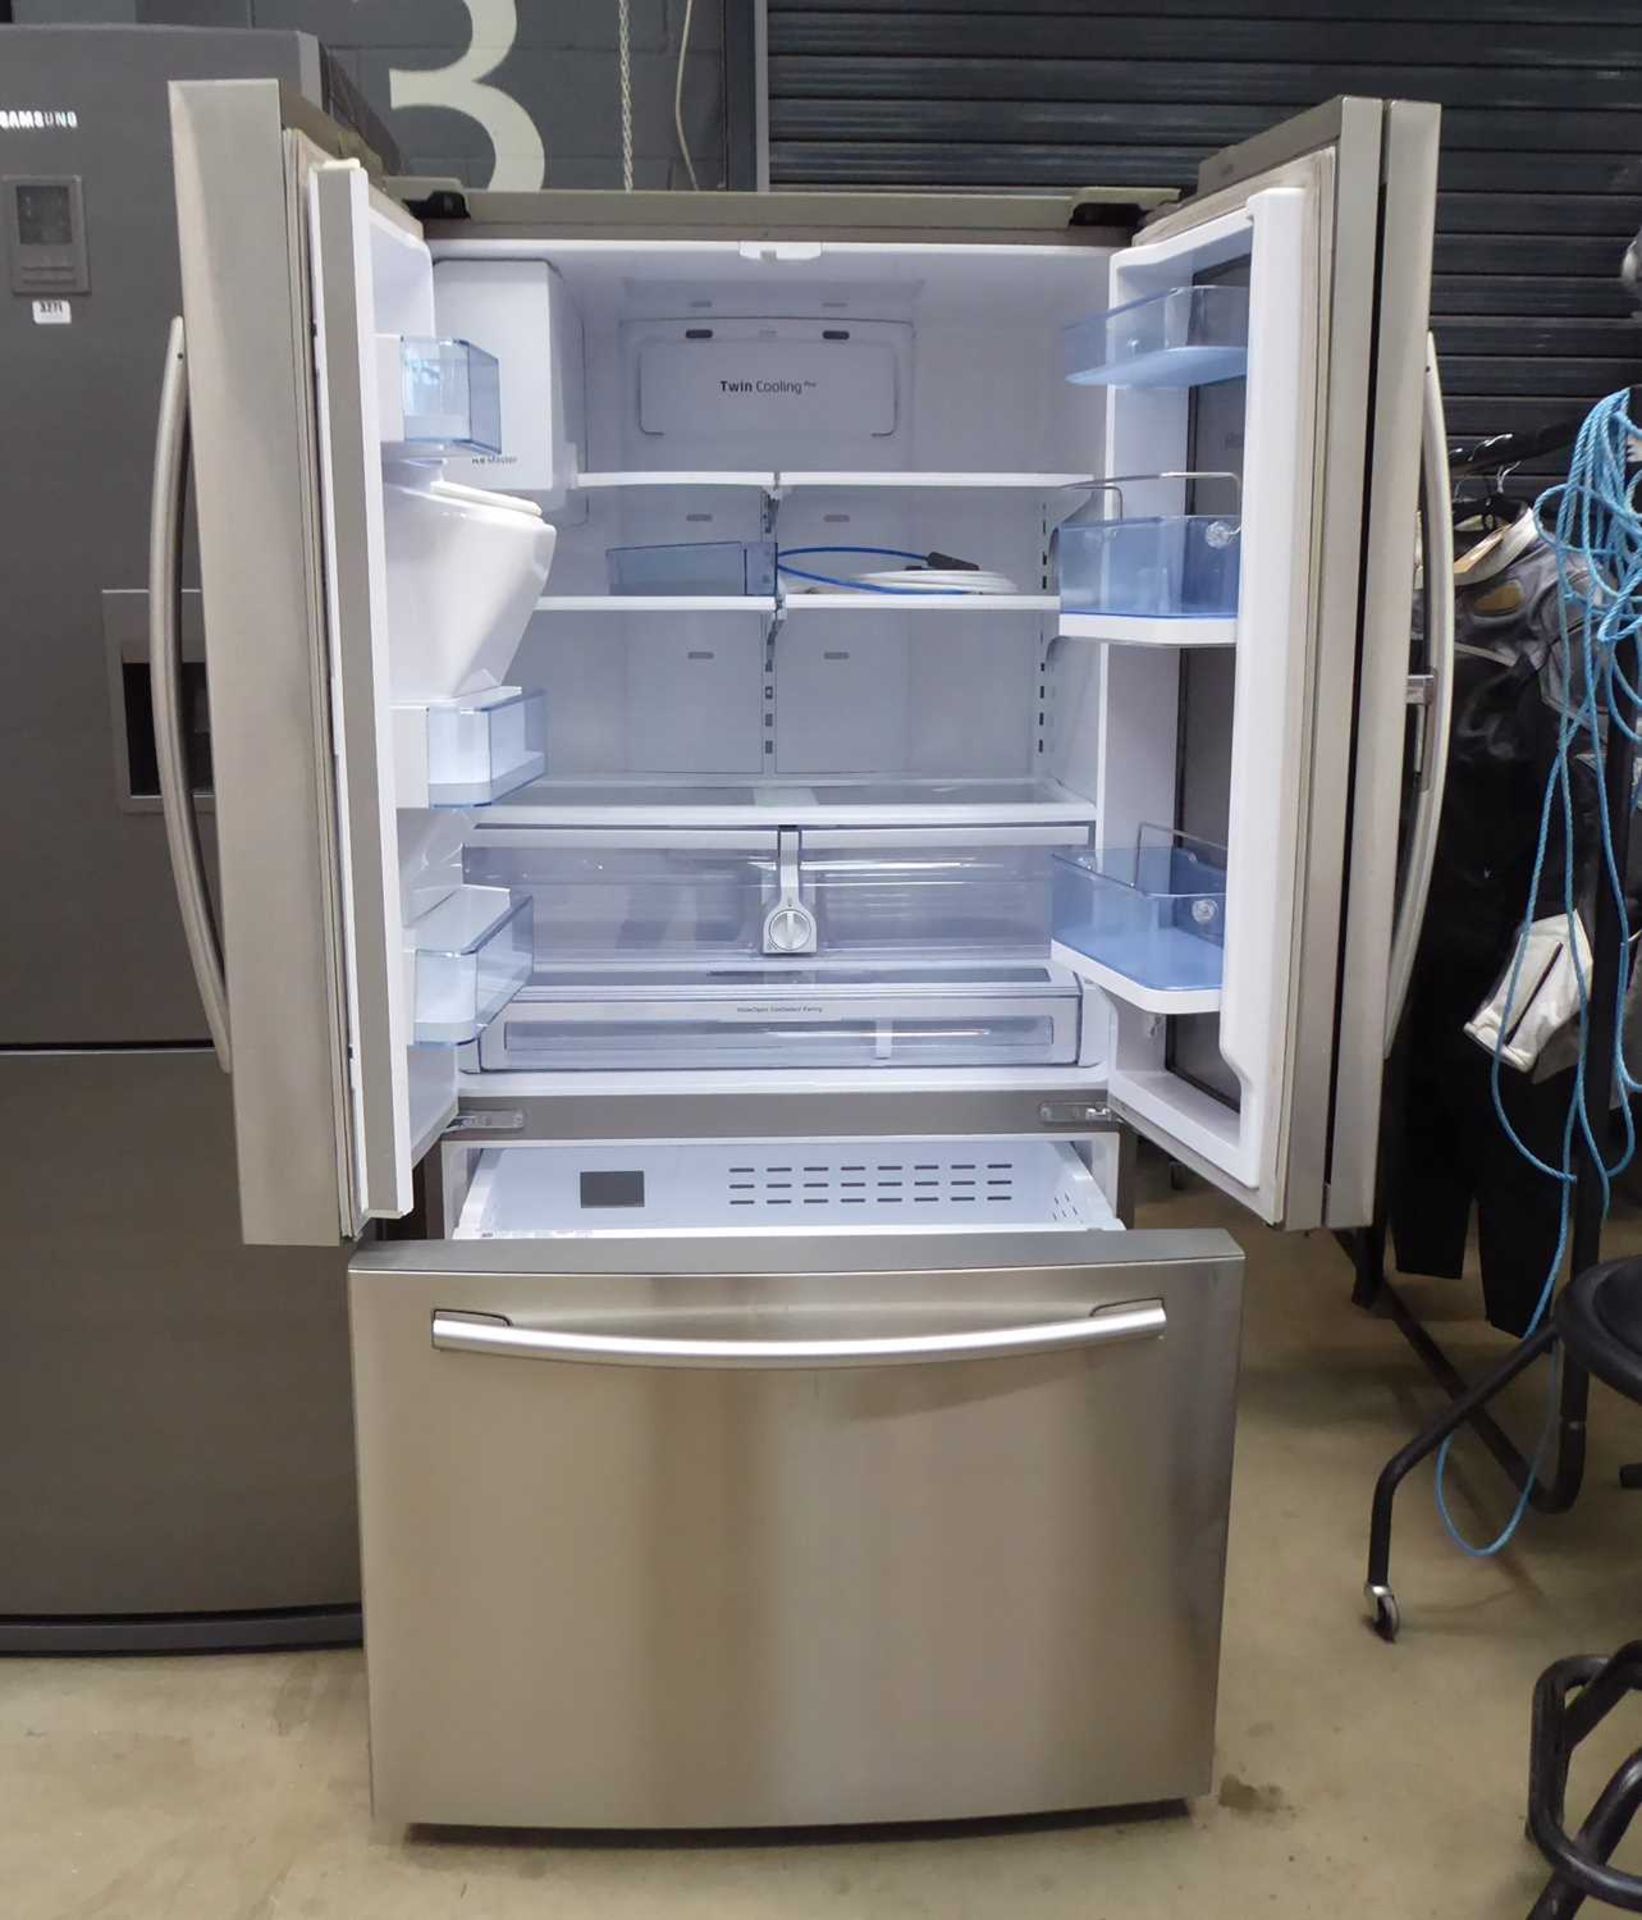 Samsung triple door American style fridge freezer - Image 2 of 2